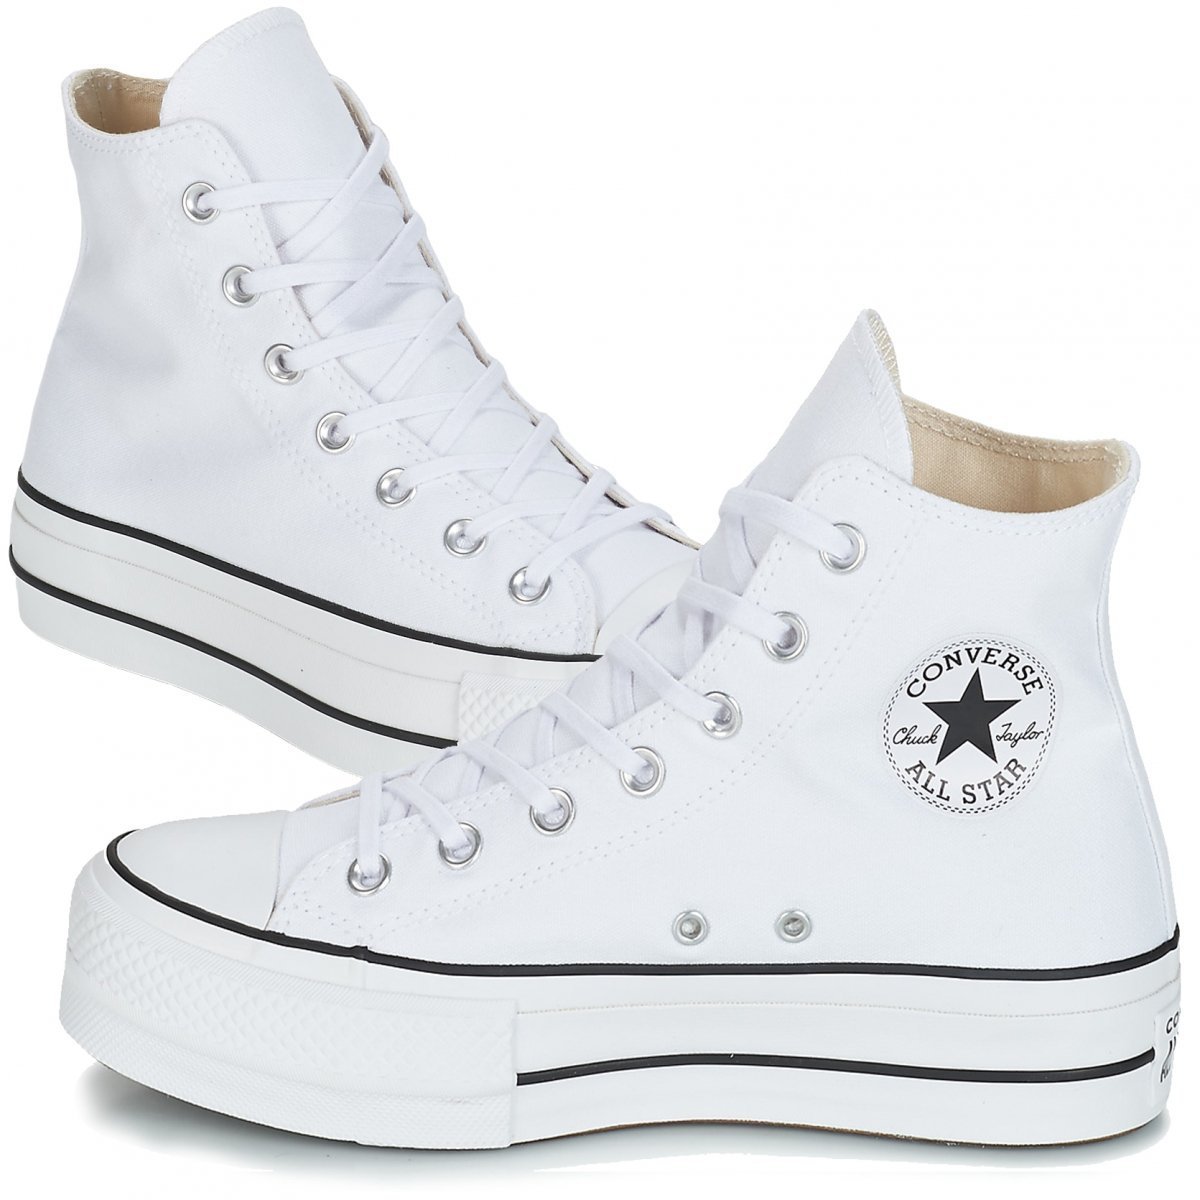 Converse buty trampki damskie białe wysokie platforma 560846C 37,5 - Converse | Sklep EMPIK.COM